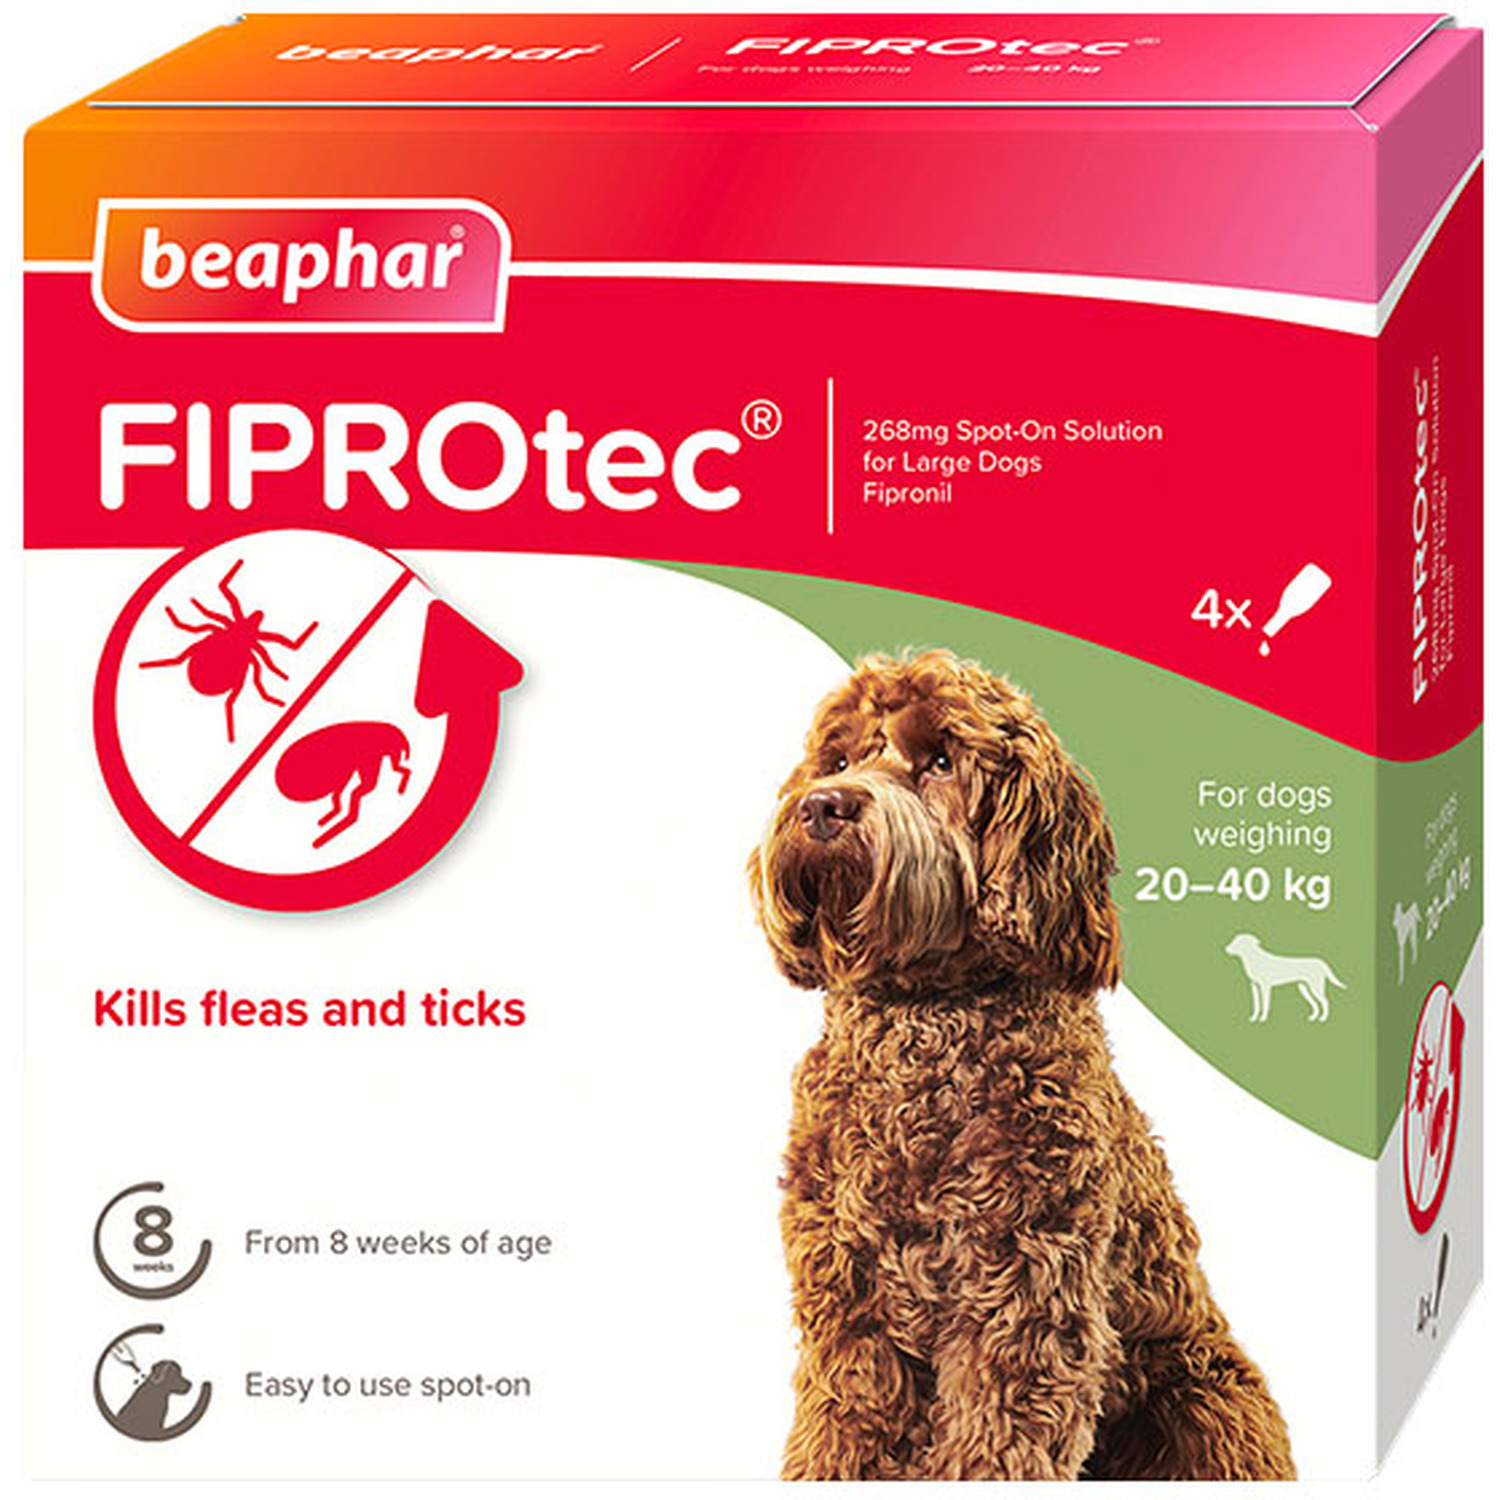 Beaphar FIPROtec Spot On for Large Dogs 4 Pack Image